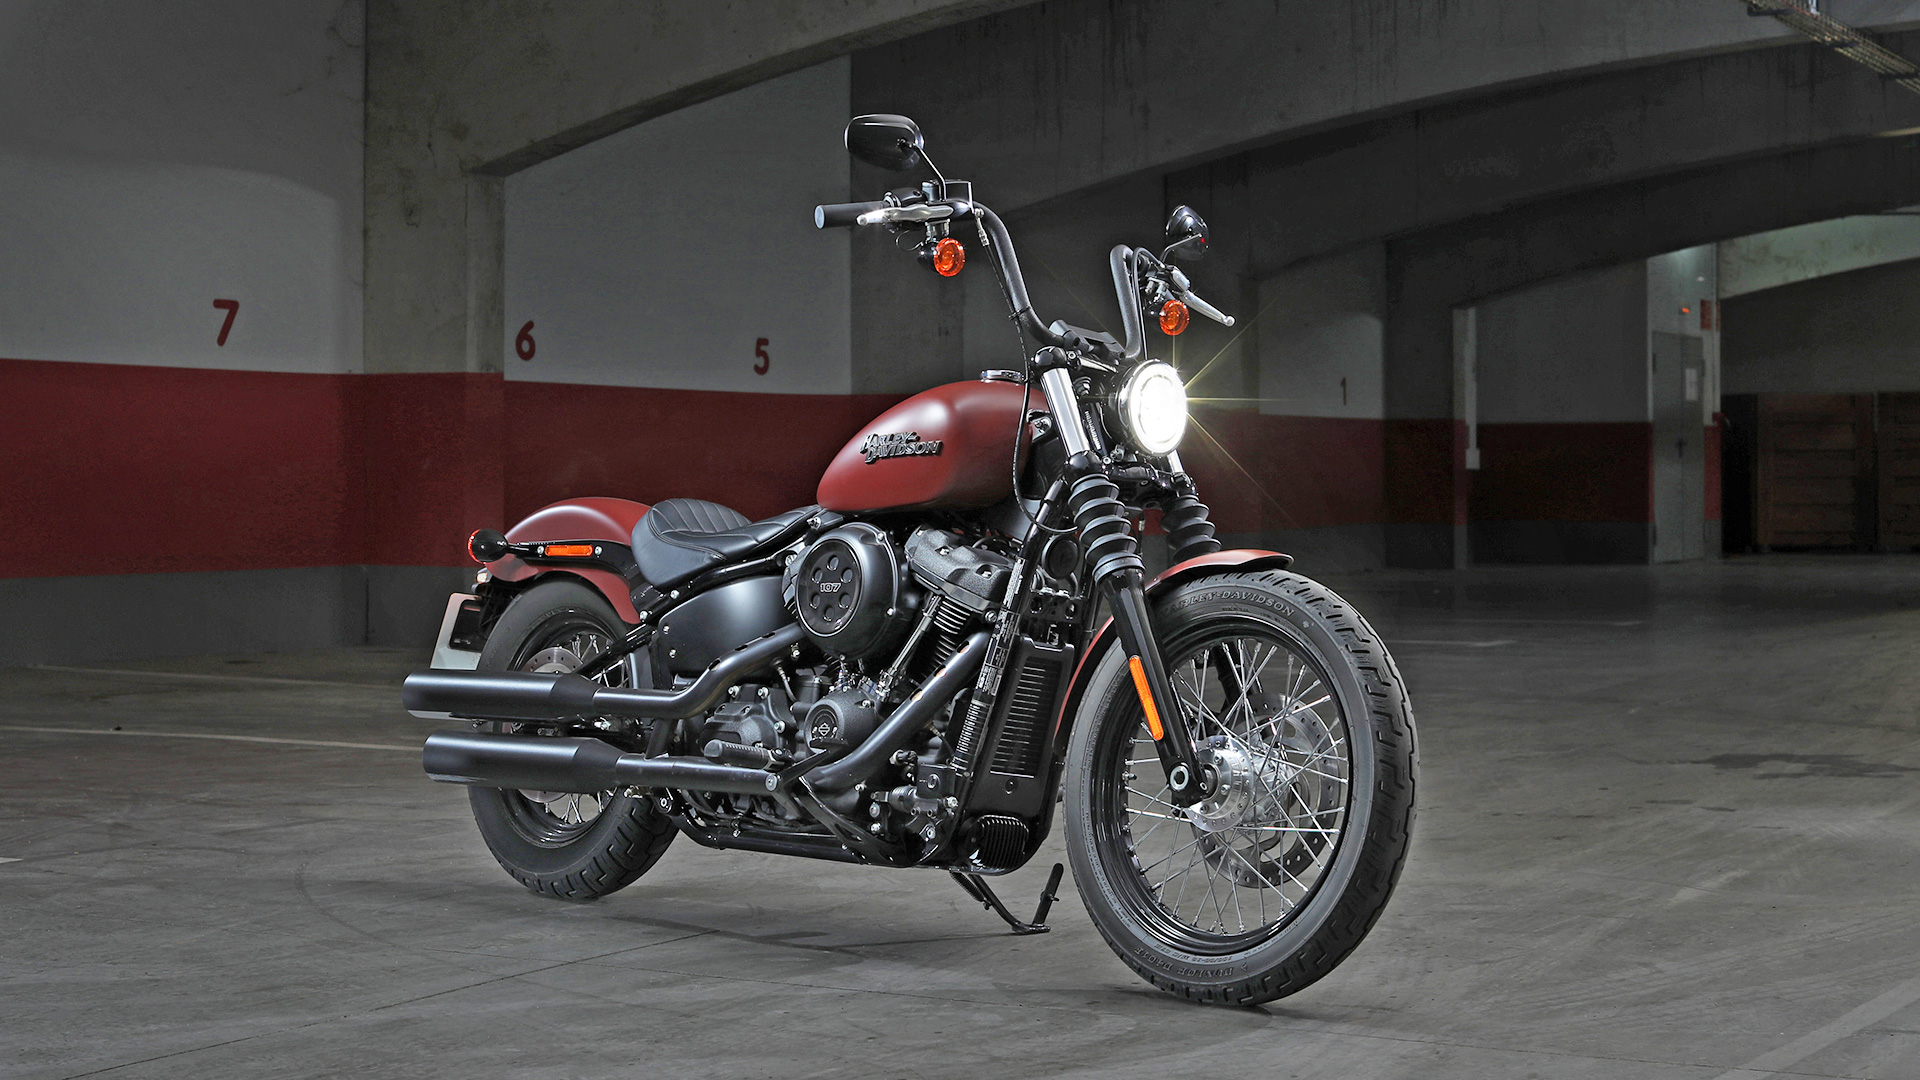 Harley Davidson 2021 in Pakistan - All Bike Models with Details Revealed!